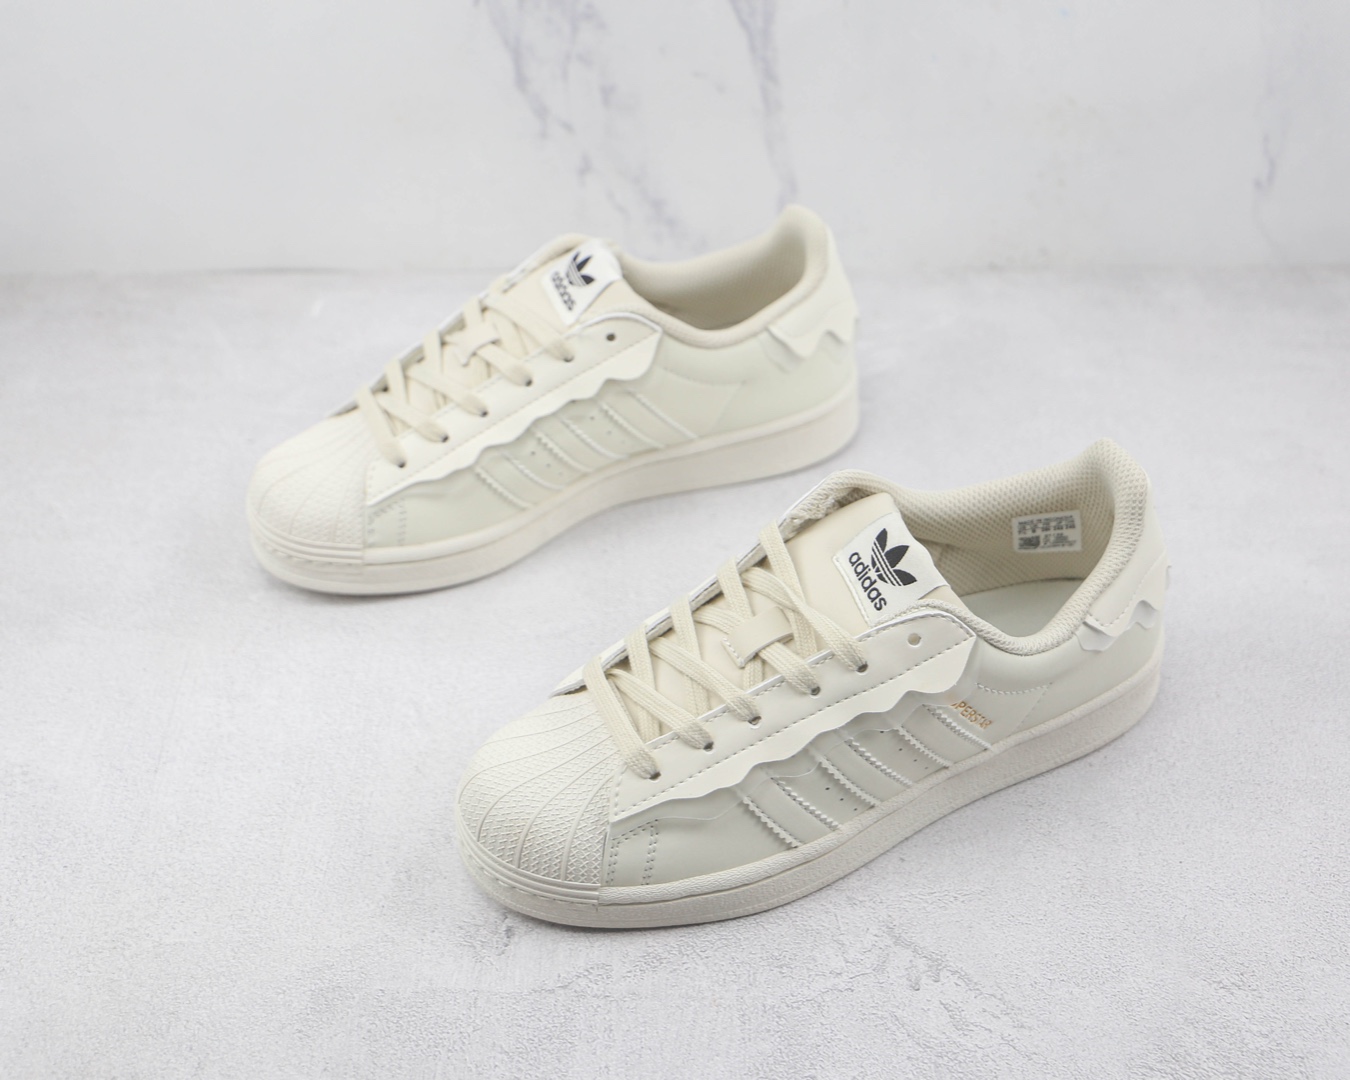 Originals Superstarmilk Whitelace 100 Original Flagship Store Adidas Shoes Shoes For Men 8498